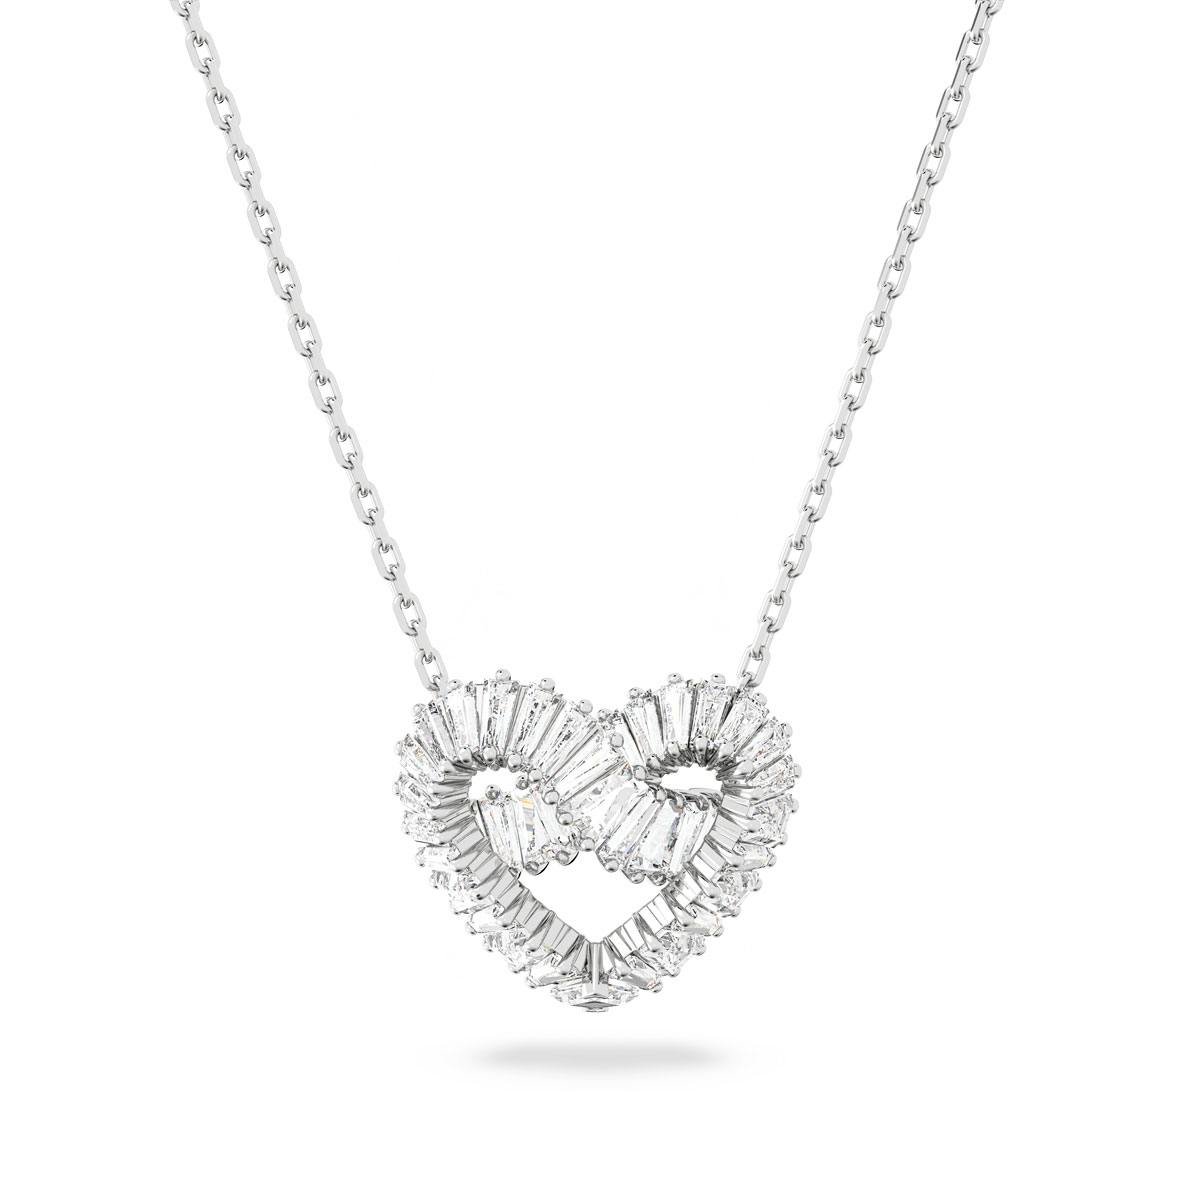 Swarovski Matrix Woven Heart Crystal and Rhodium Pendant Necklace